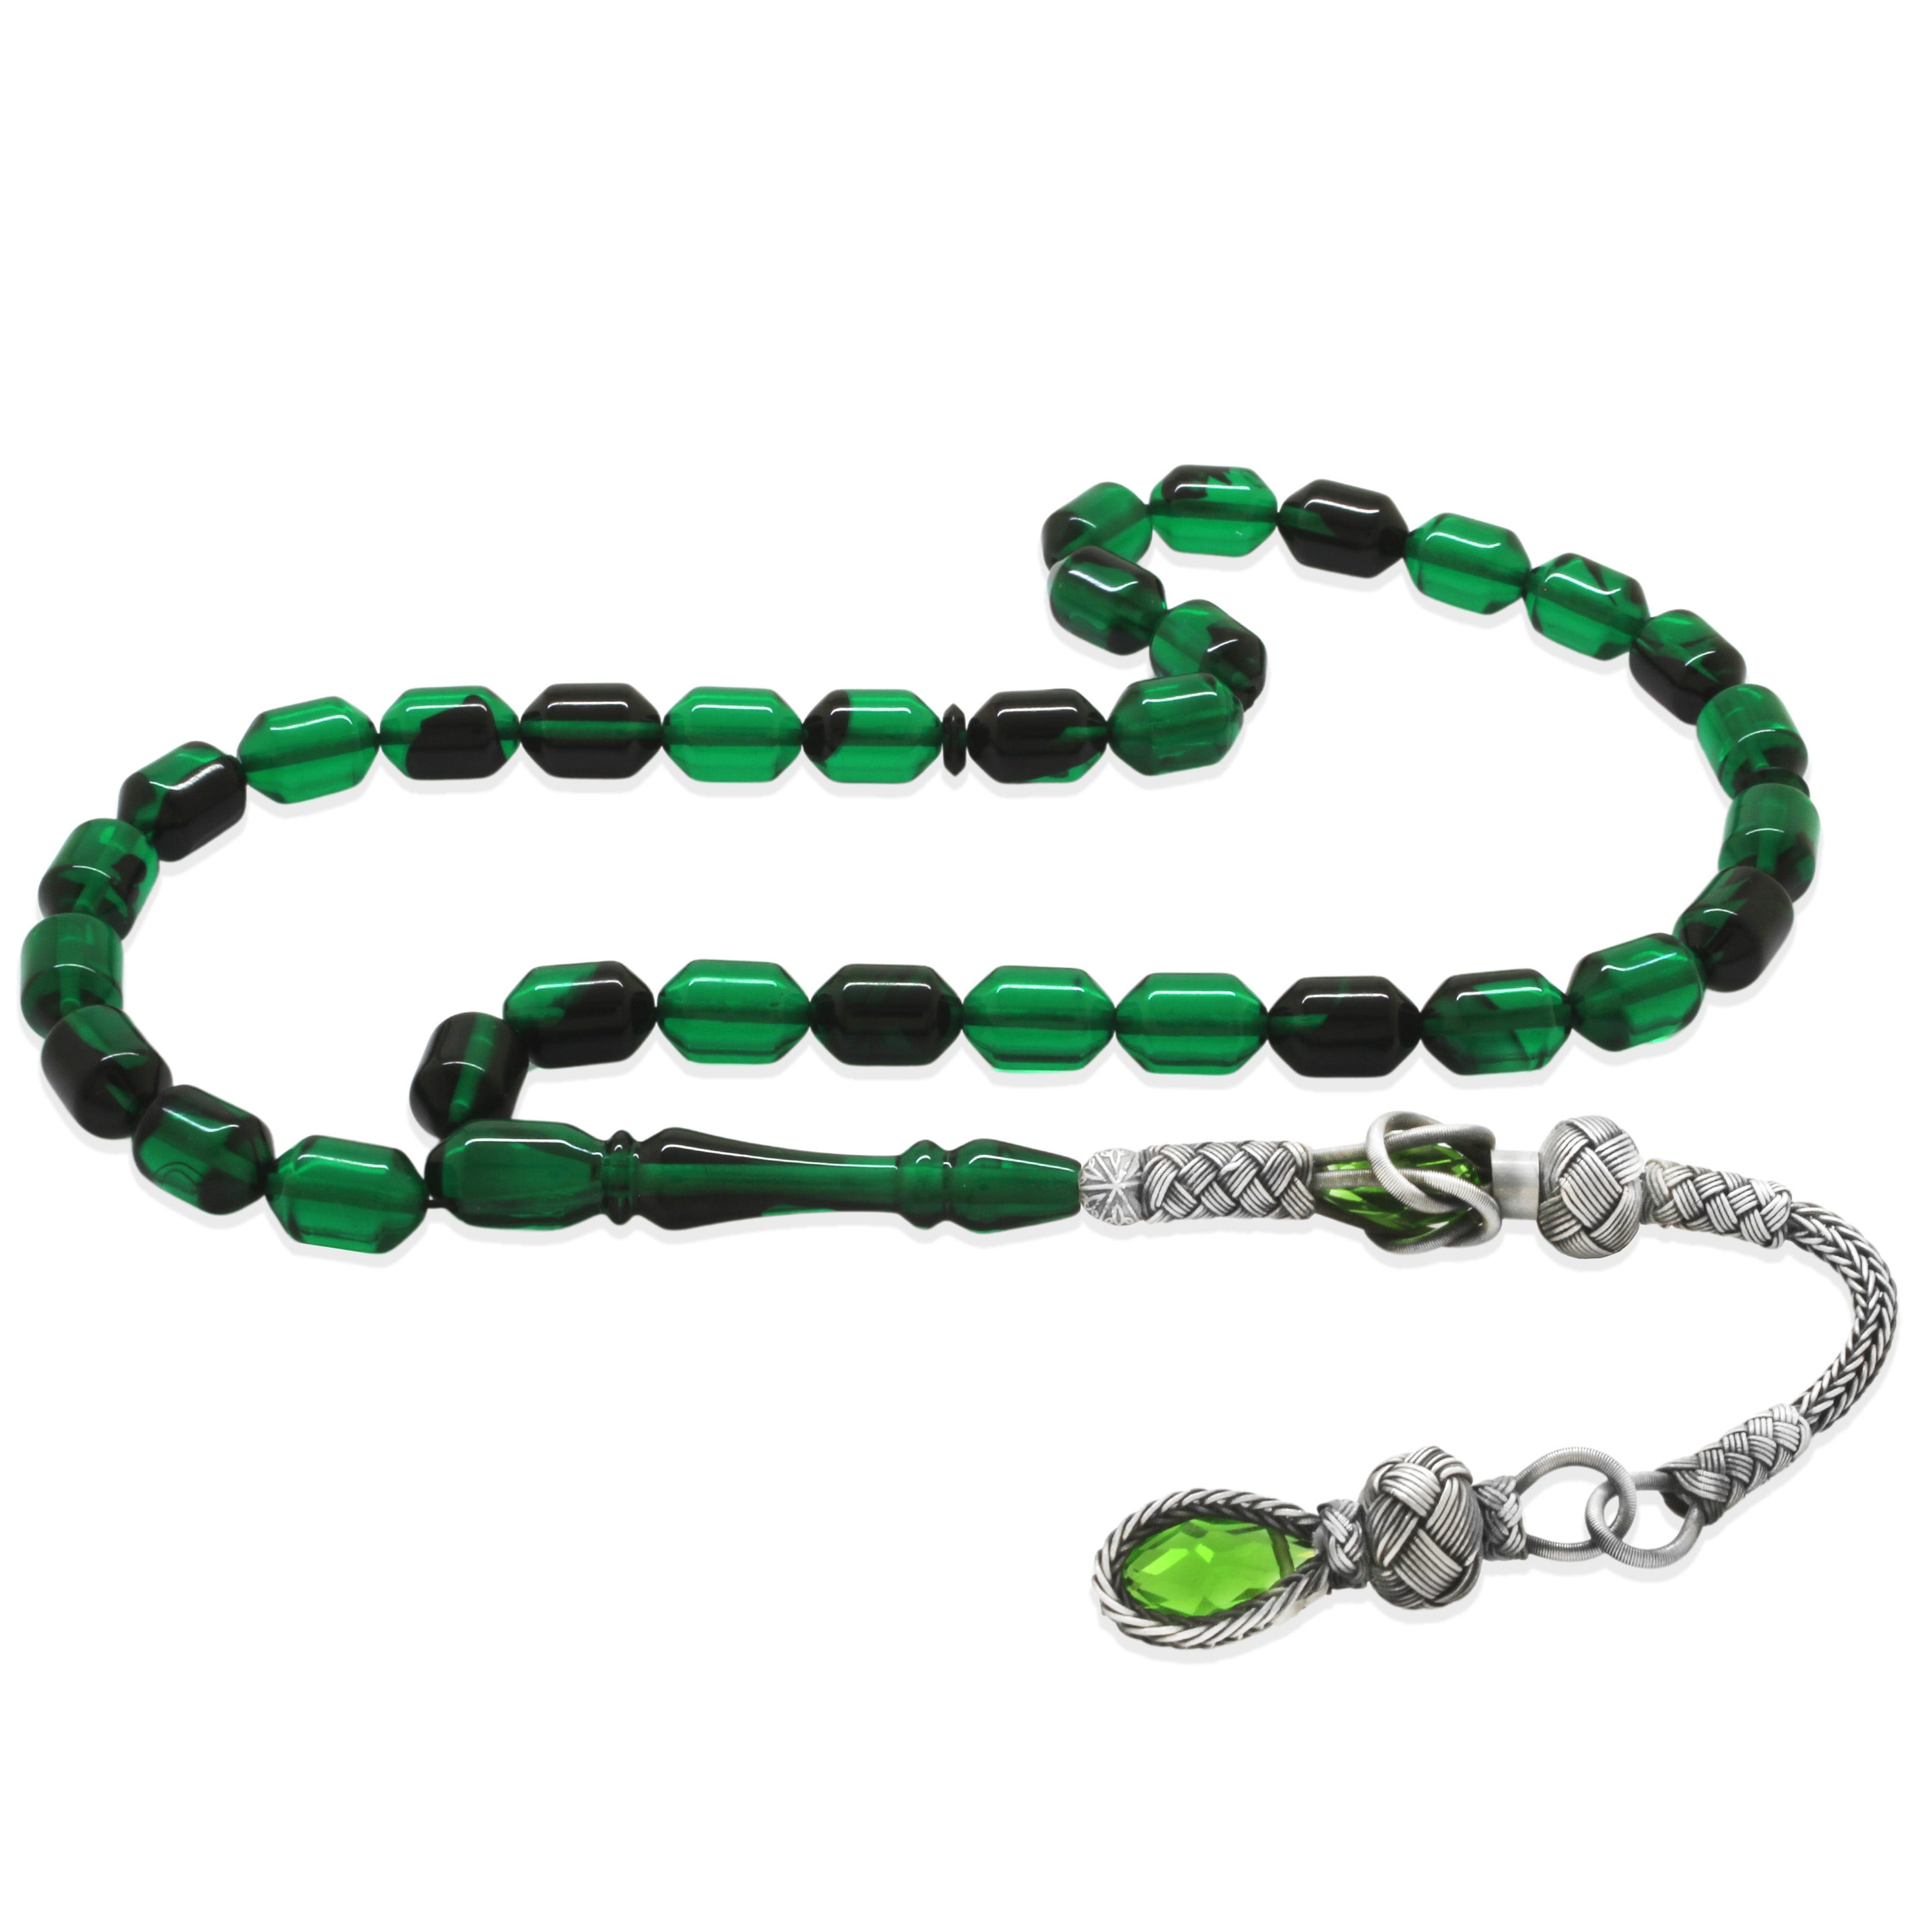 1000 Sterling Silver Kazaz Tasseled Green-Black Fire Amber Rosary